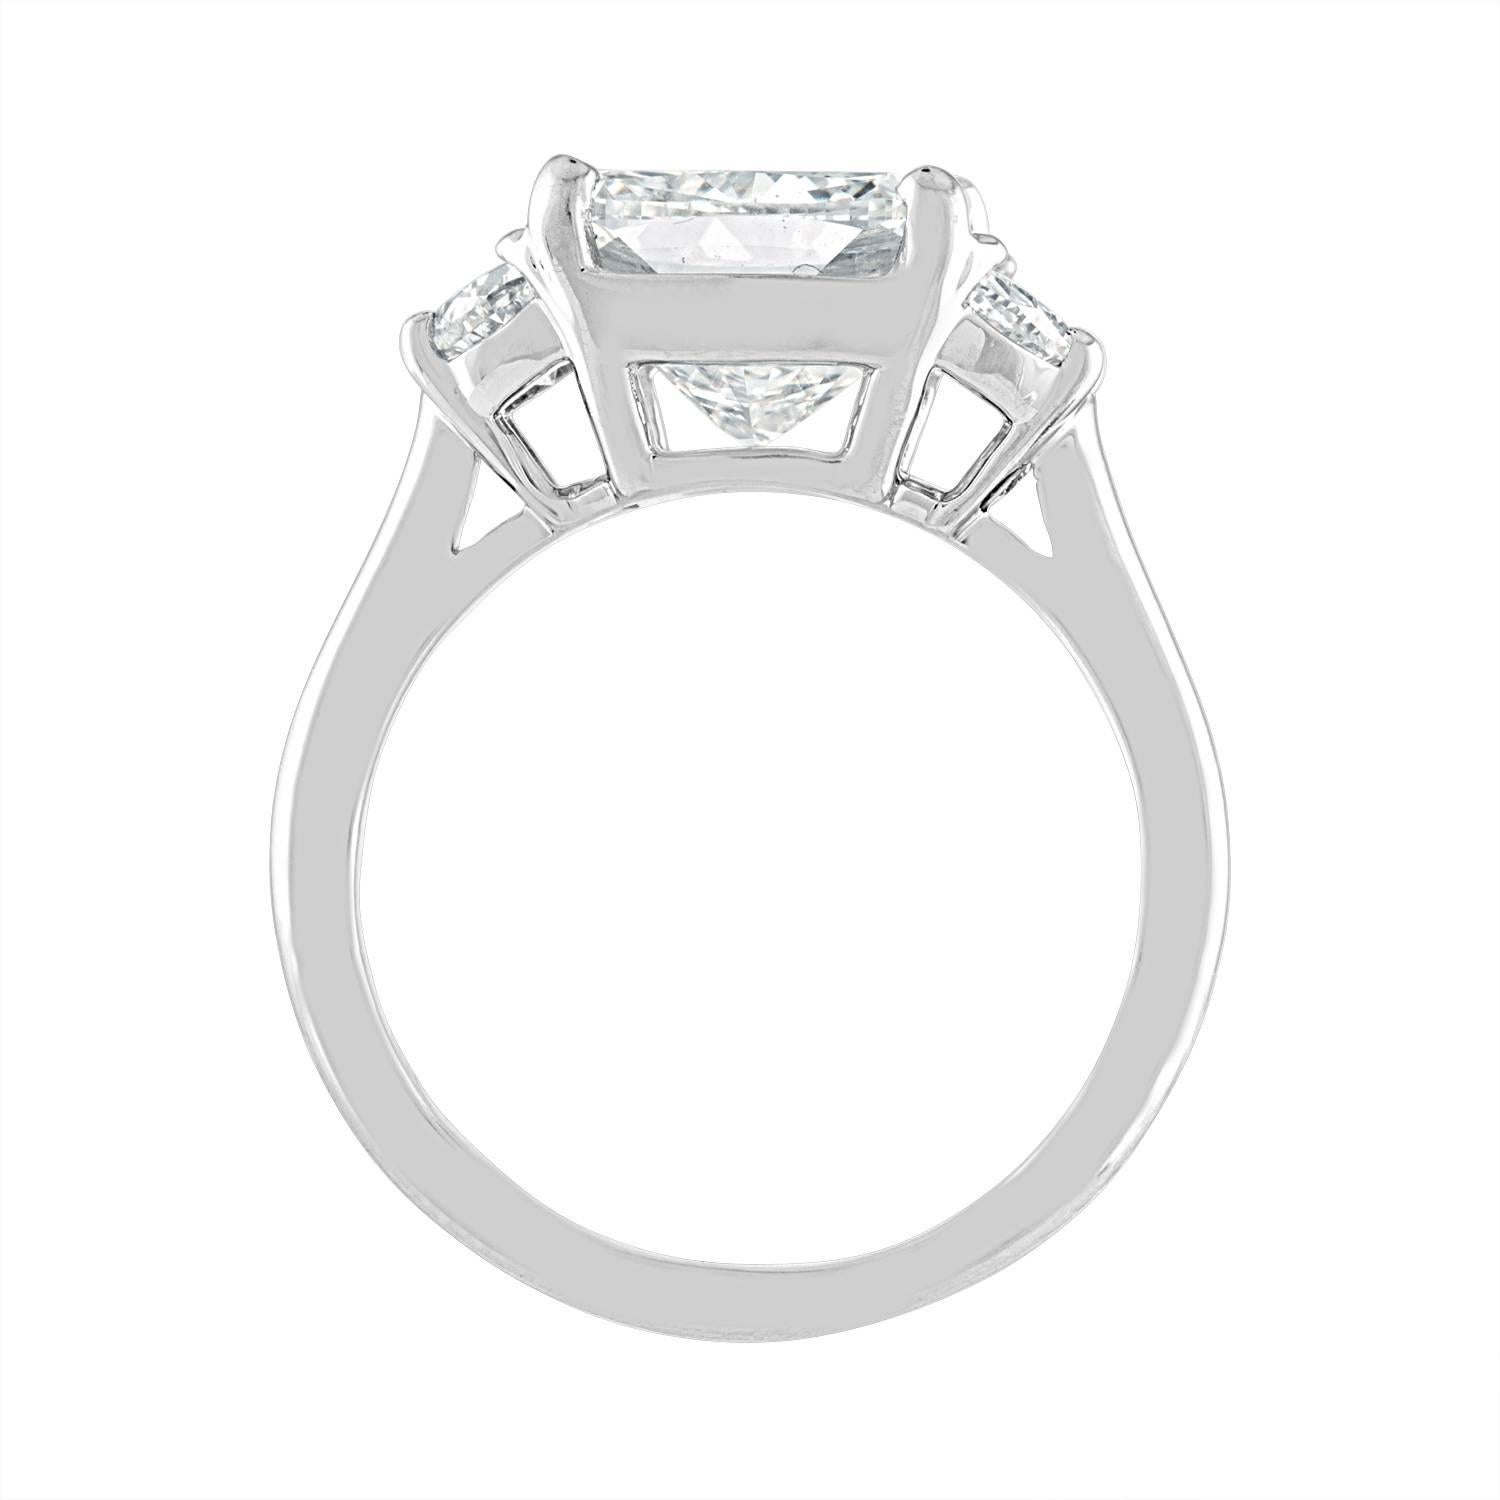 Contemporary 4.01 Carat Cushion Cut Diamond, GIA Certified HSI1 Set in 3 Stone Platinum Ring